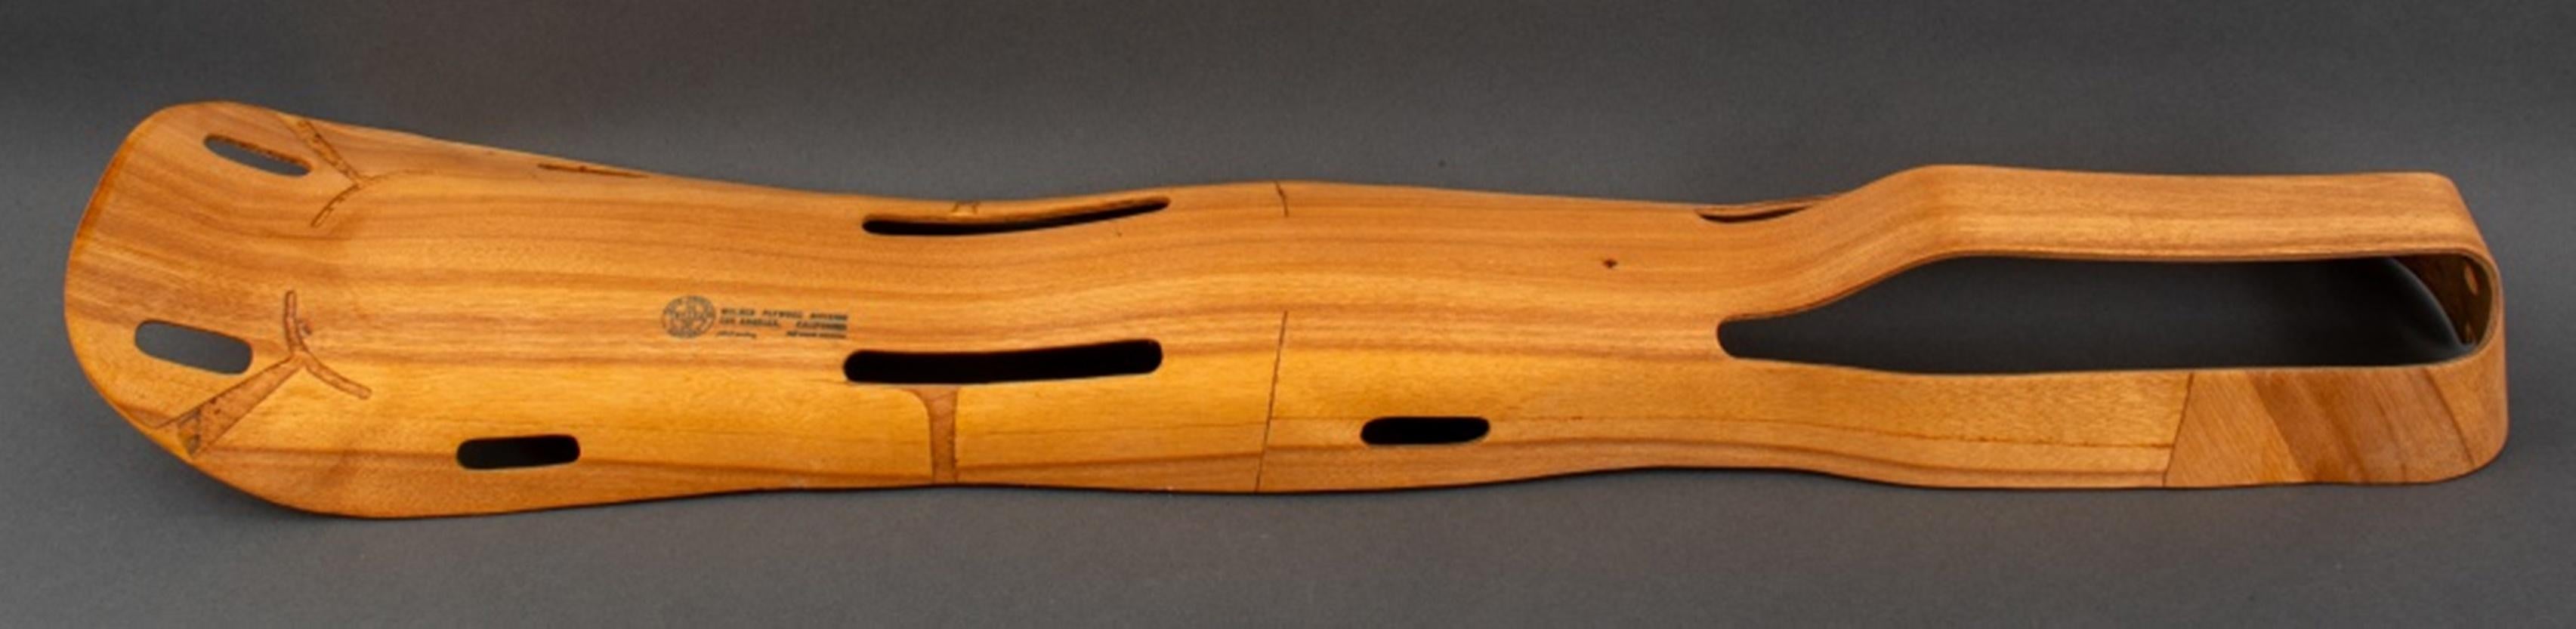 20th Century Charles & Ray Eames Molded Plywood Leg Splint